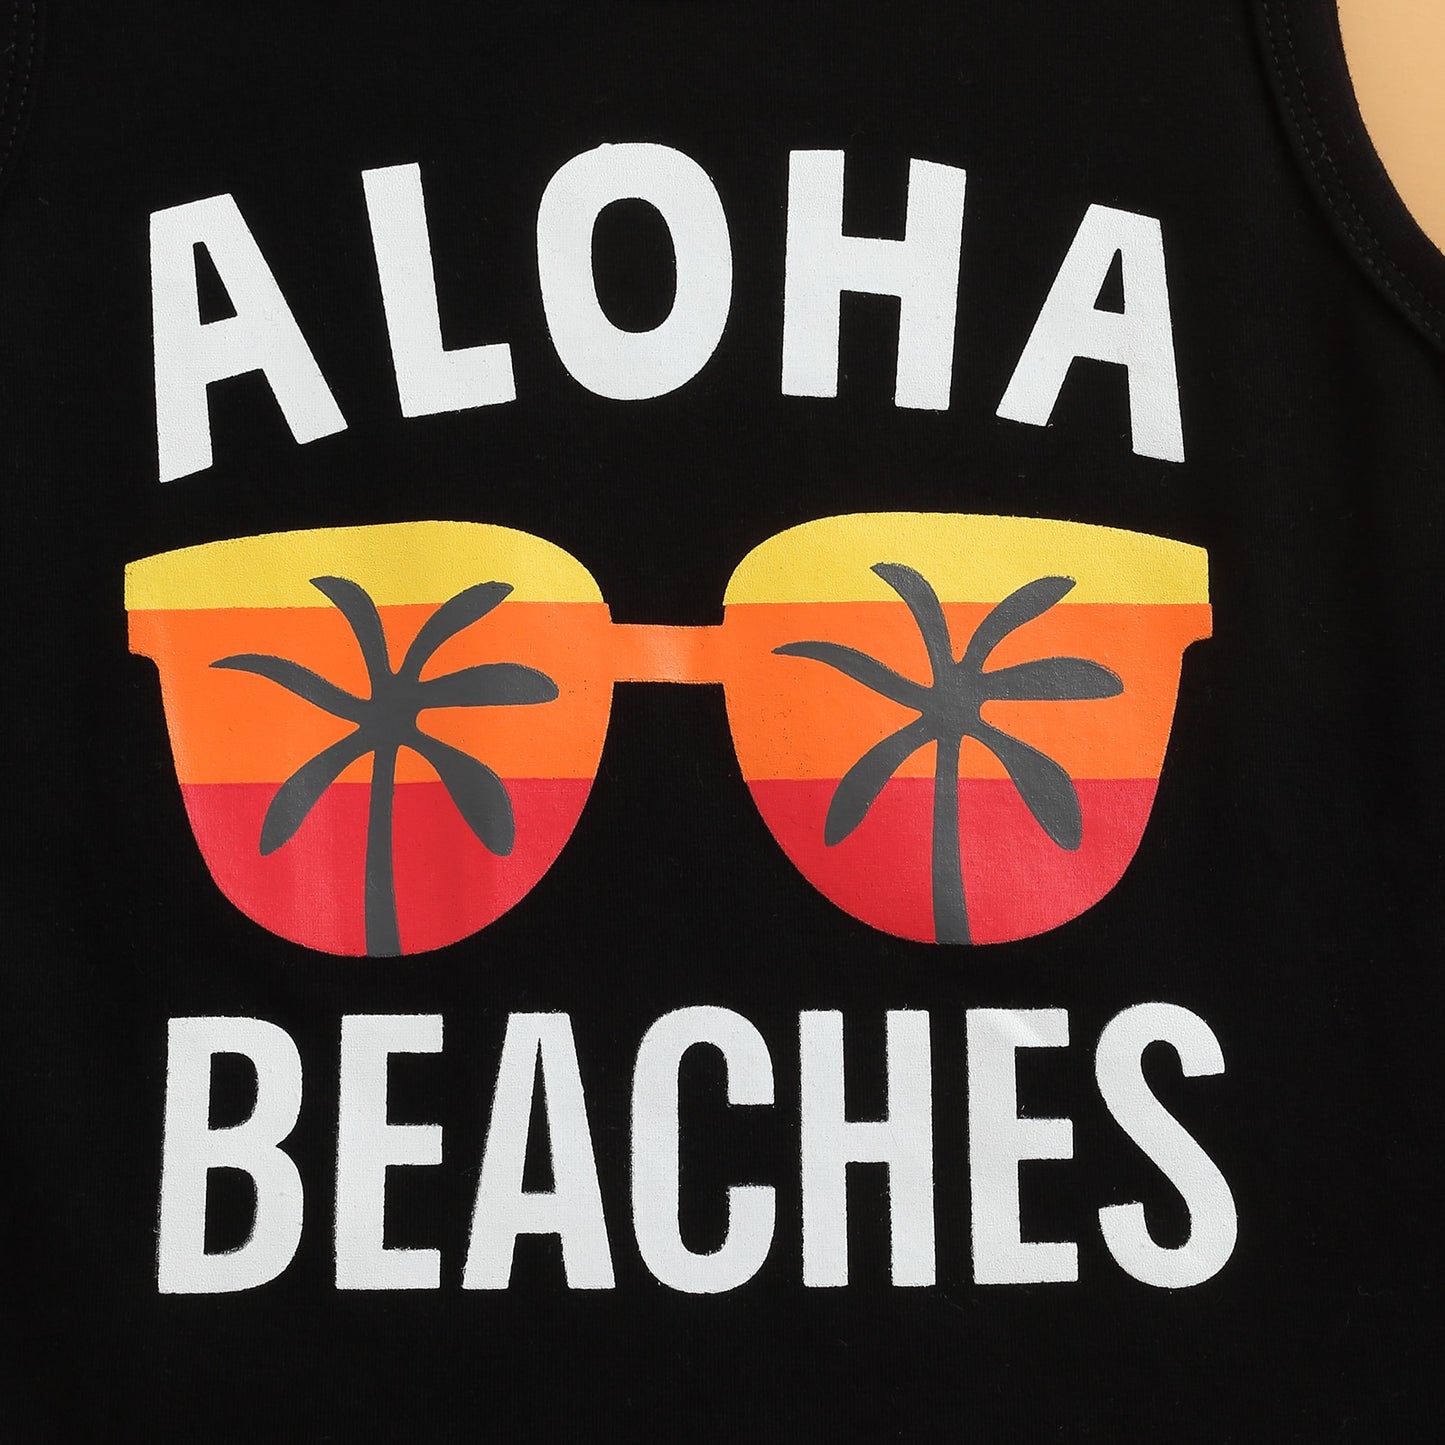 Beach Print Shirt + Shorts